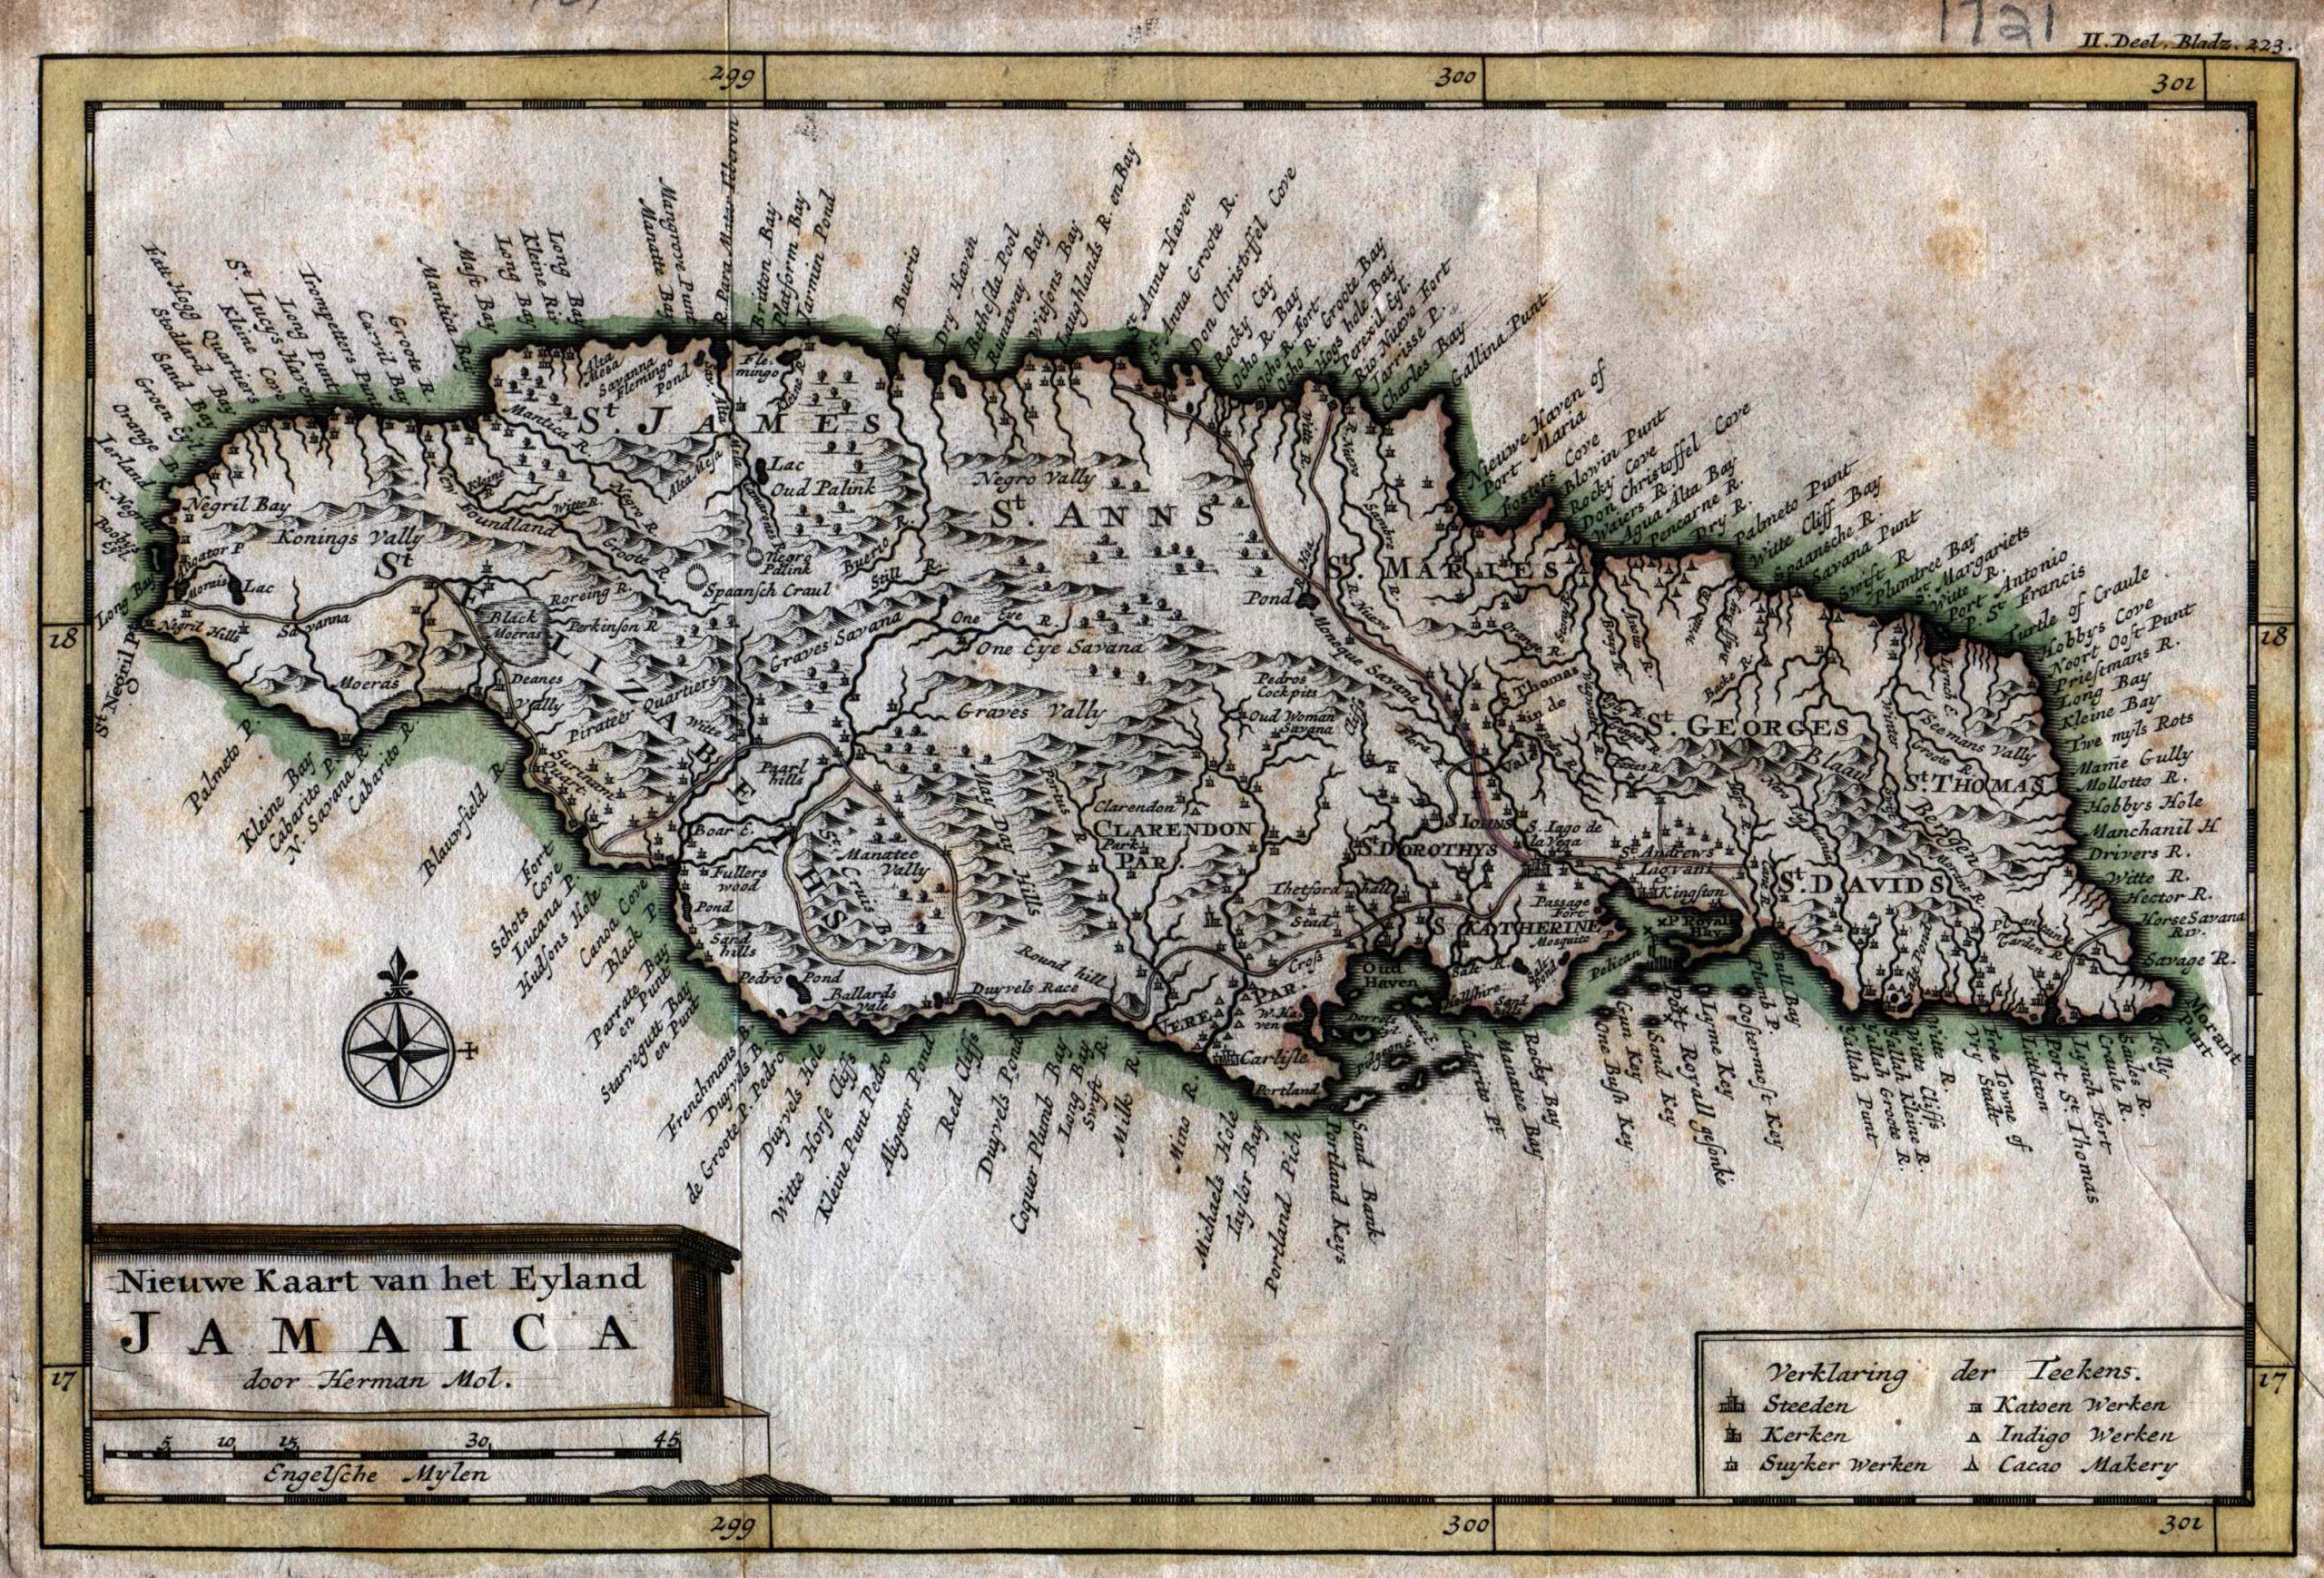 Moll 1710 Map of Jamaica